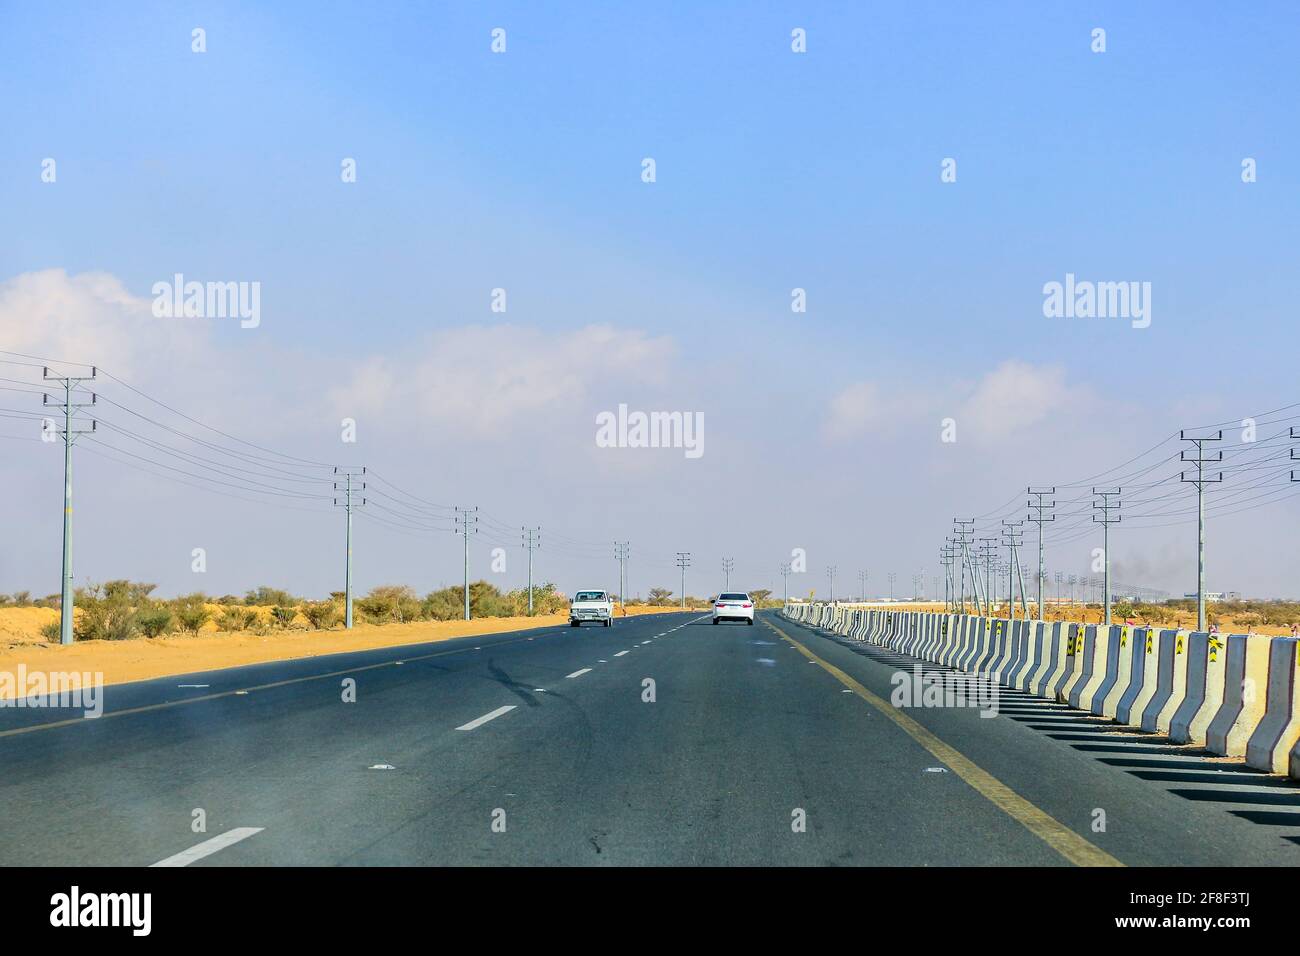 saudi arabian desert road Stock Photo